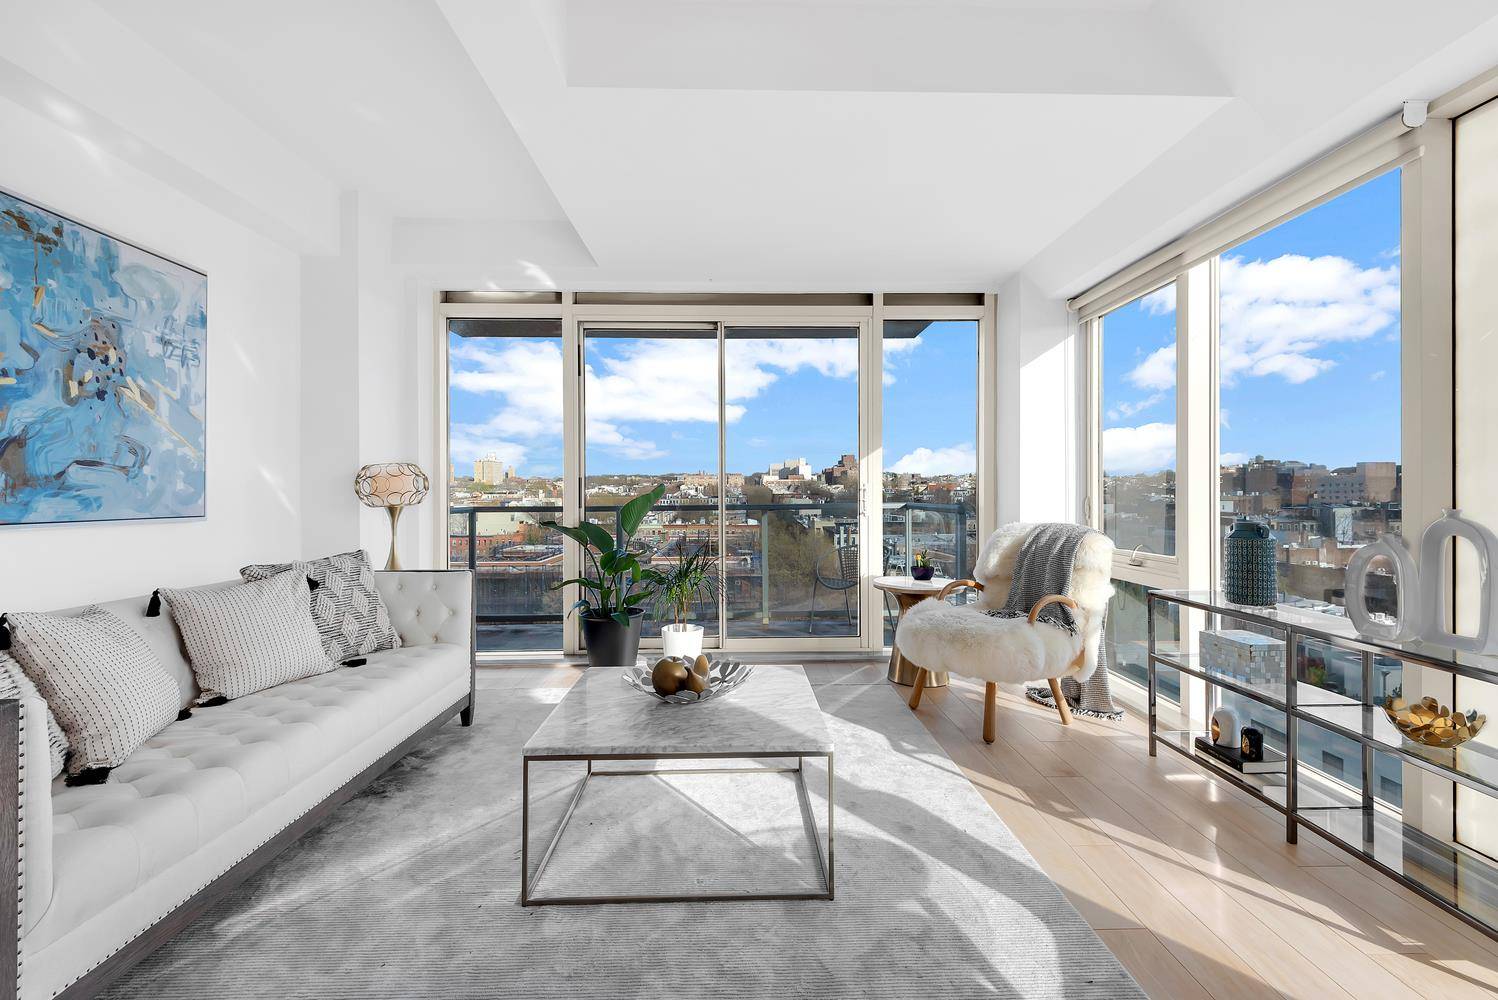 Beautiful, expansive 1, 170 square foot modern gem at Novo condominium in Park Slope !